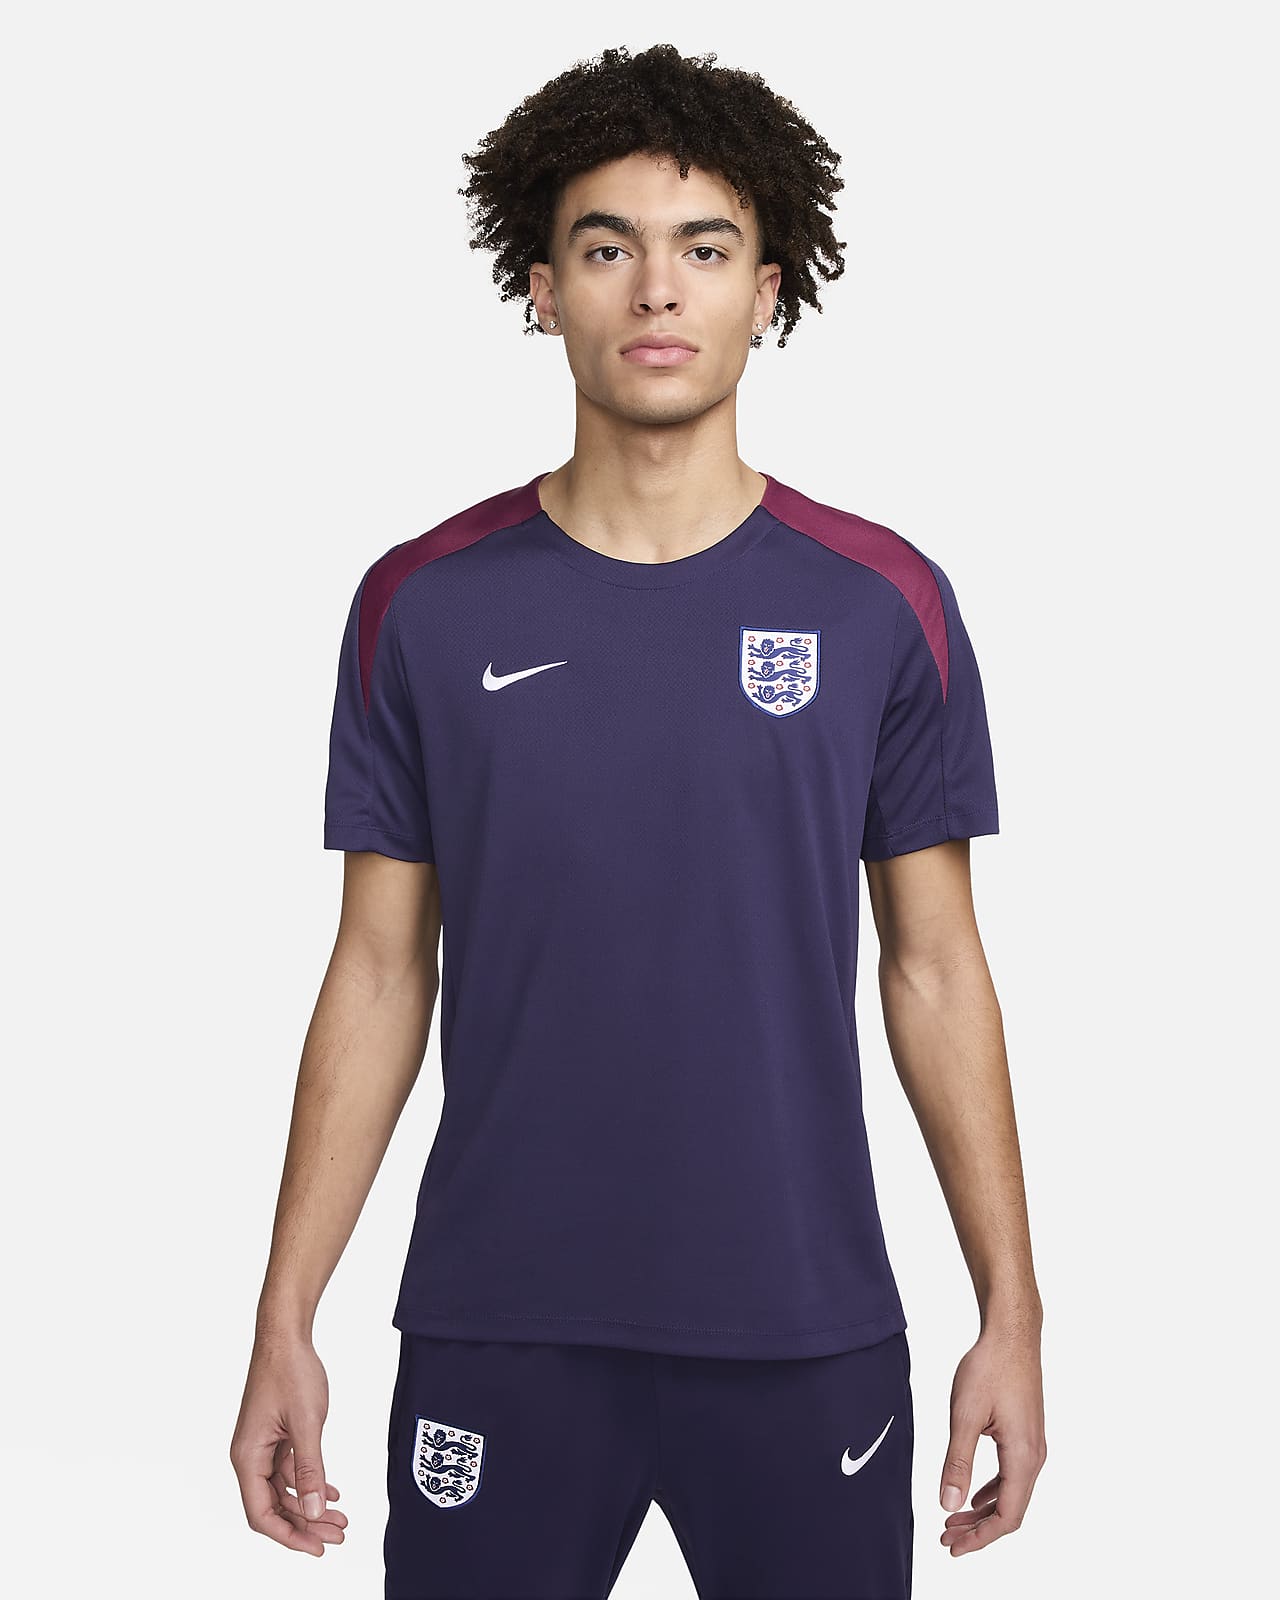 England Strike Men's Nike Dri-FIT Football Short-Sleeve Knit Top